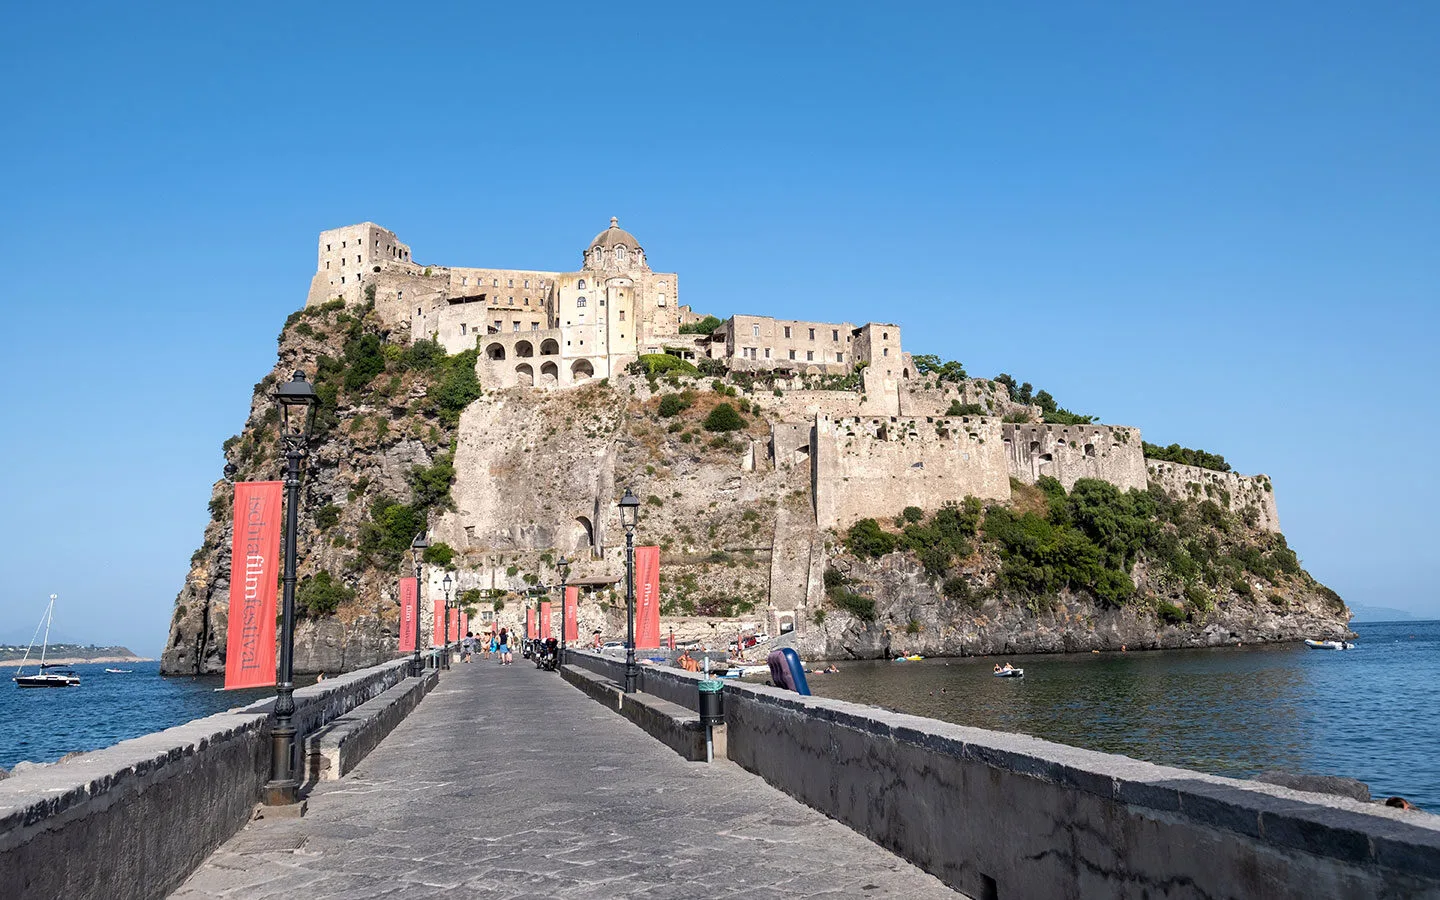 The medieval Castello Aragonese island castle in Ischia